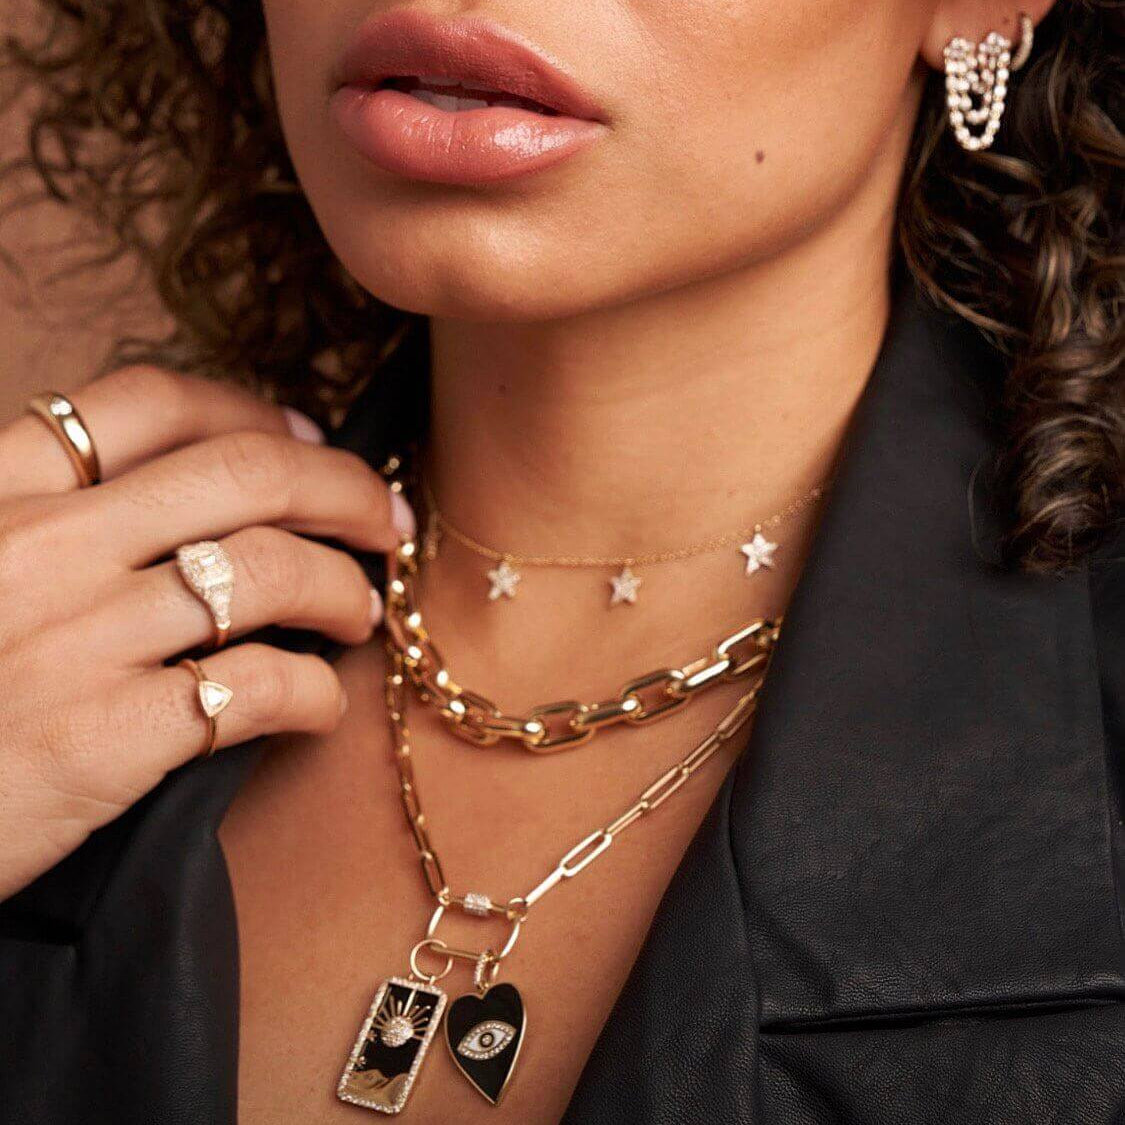 14K Gold Diamond Black Enamel Eye Heart Charm - Charms & Pendants - Izakov Diamonds + Fine Jewelry